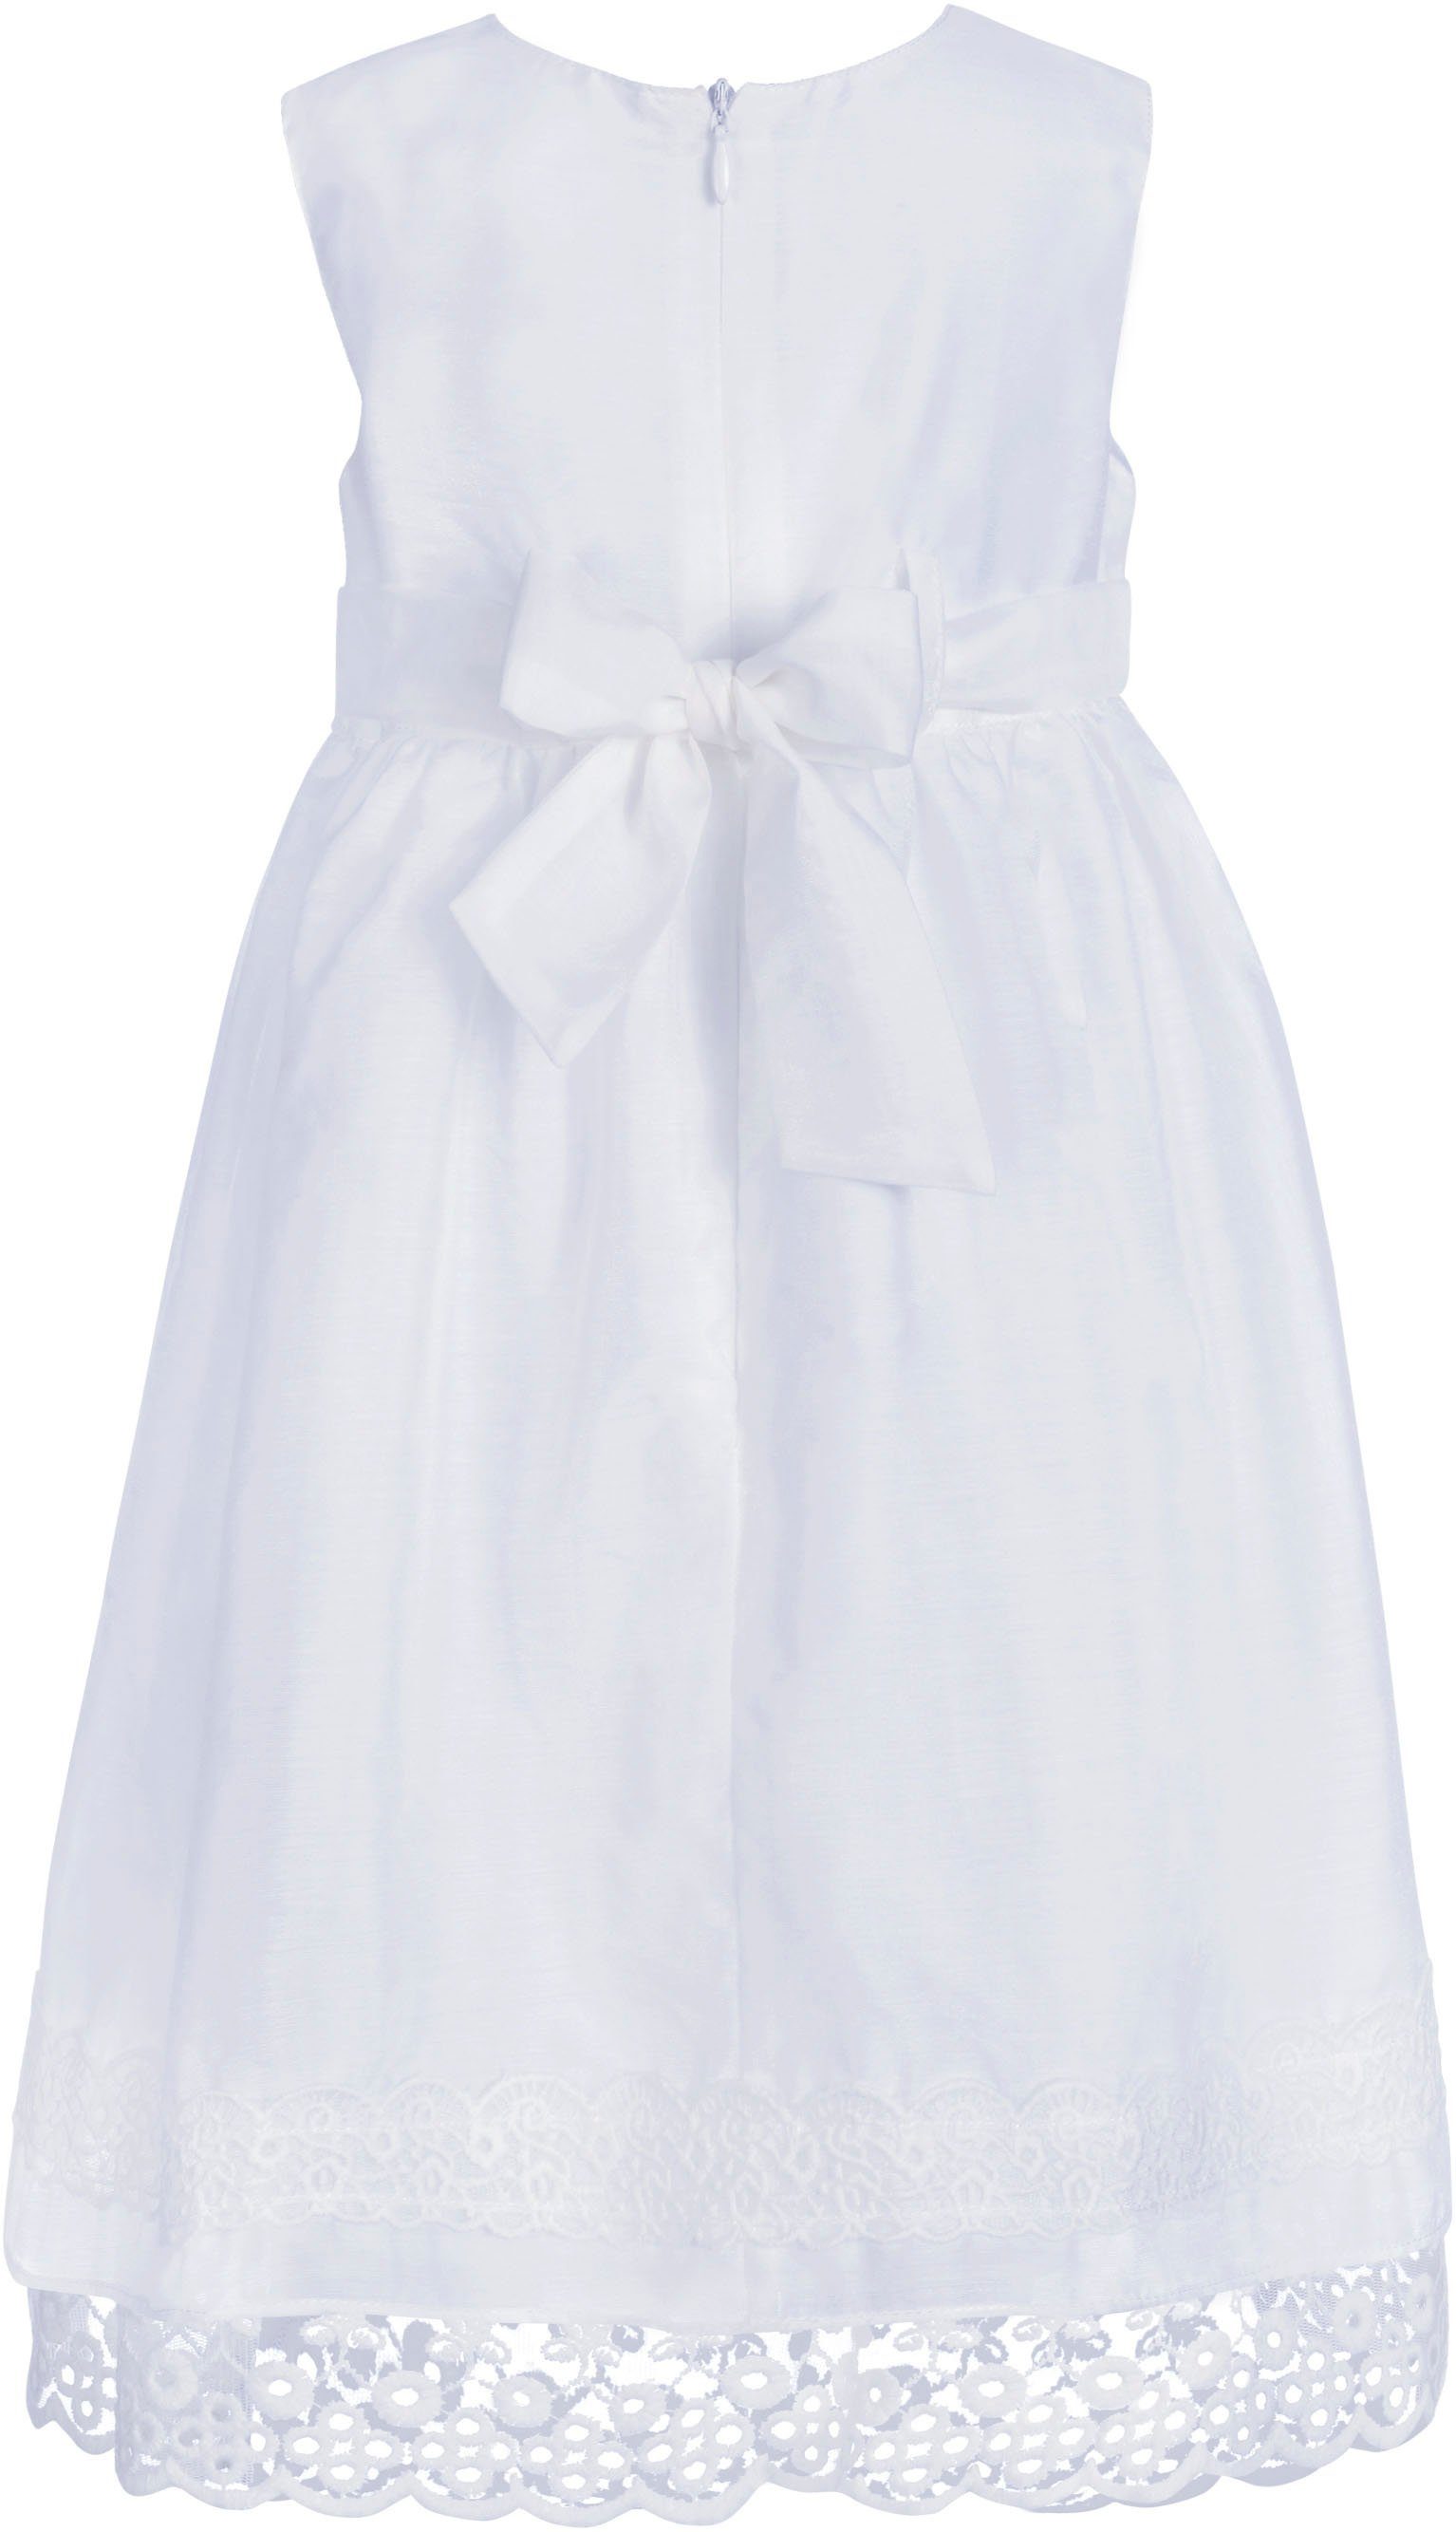 girls happy Minikleid white dress